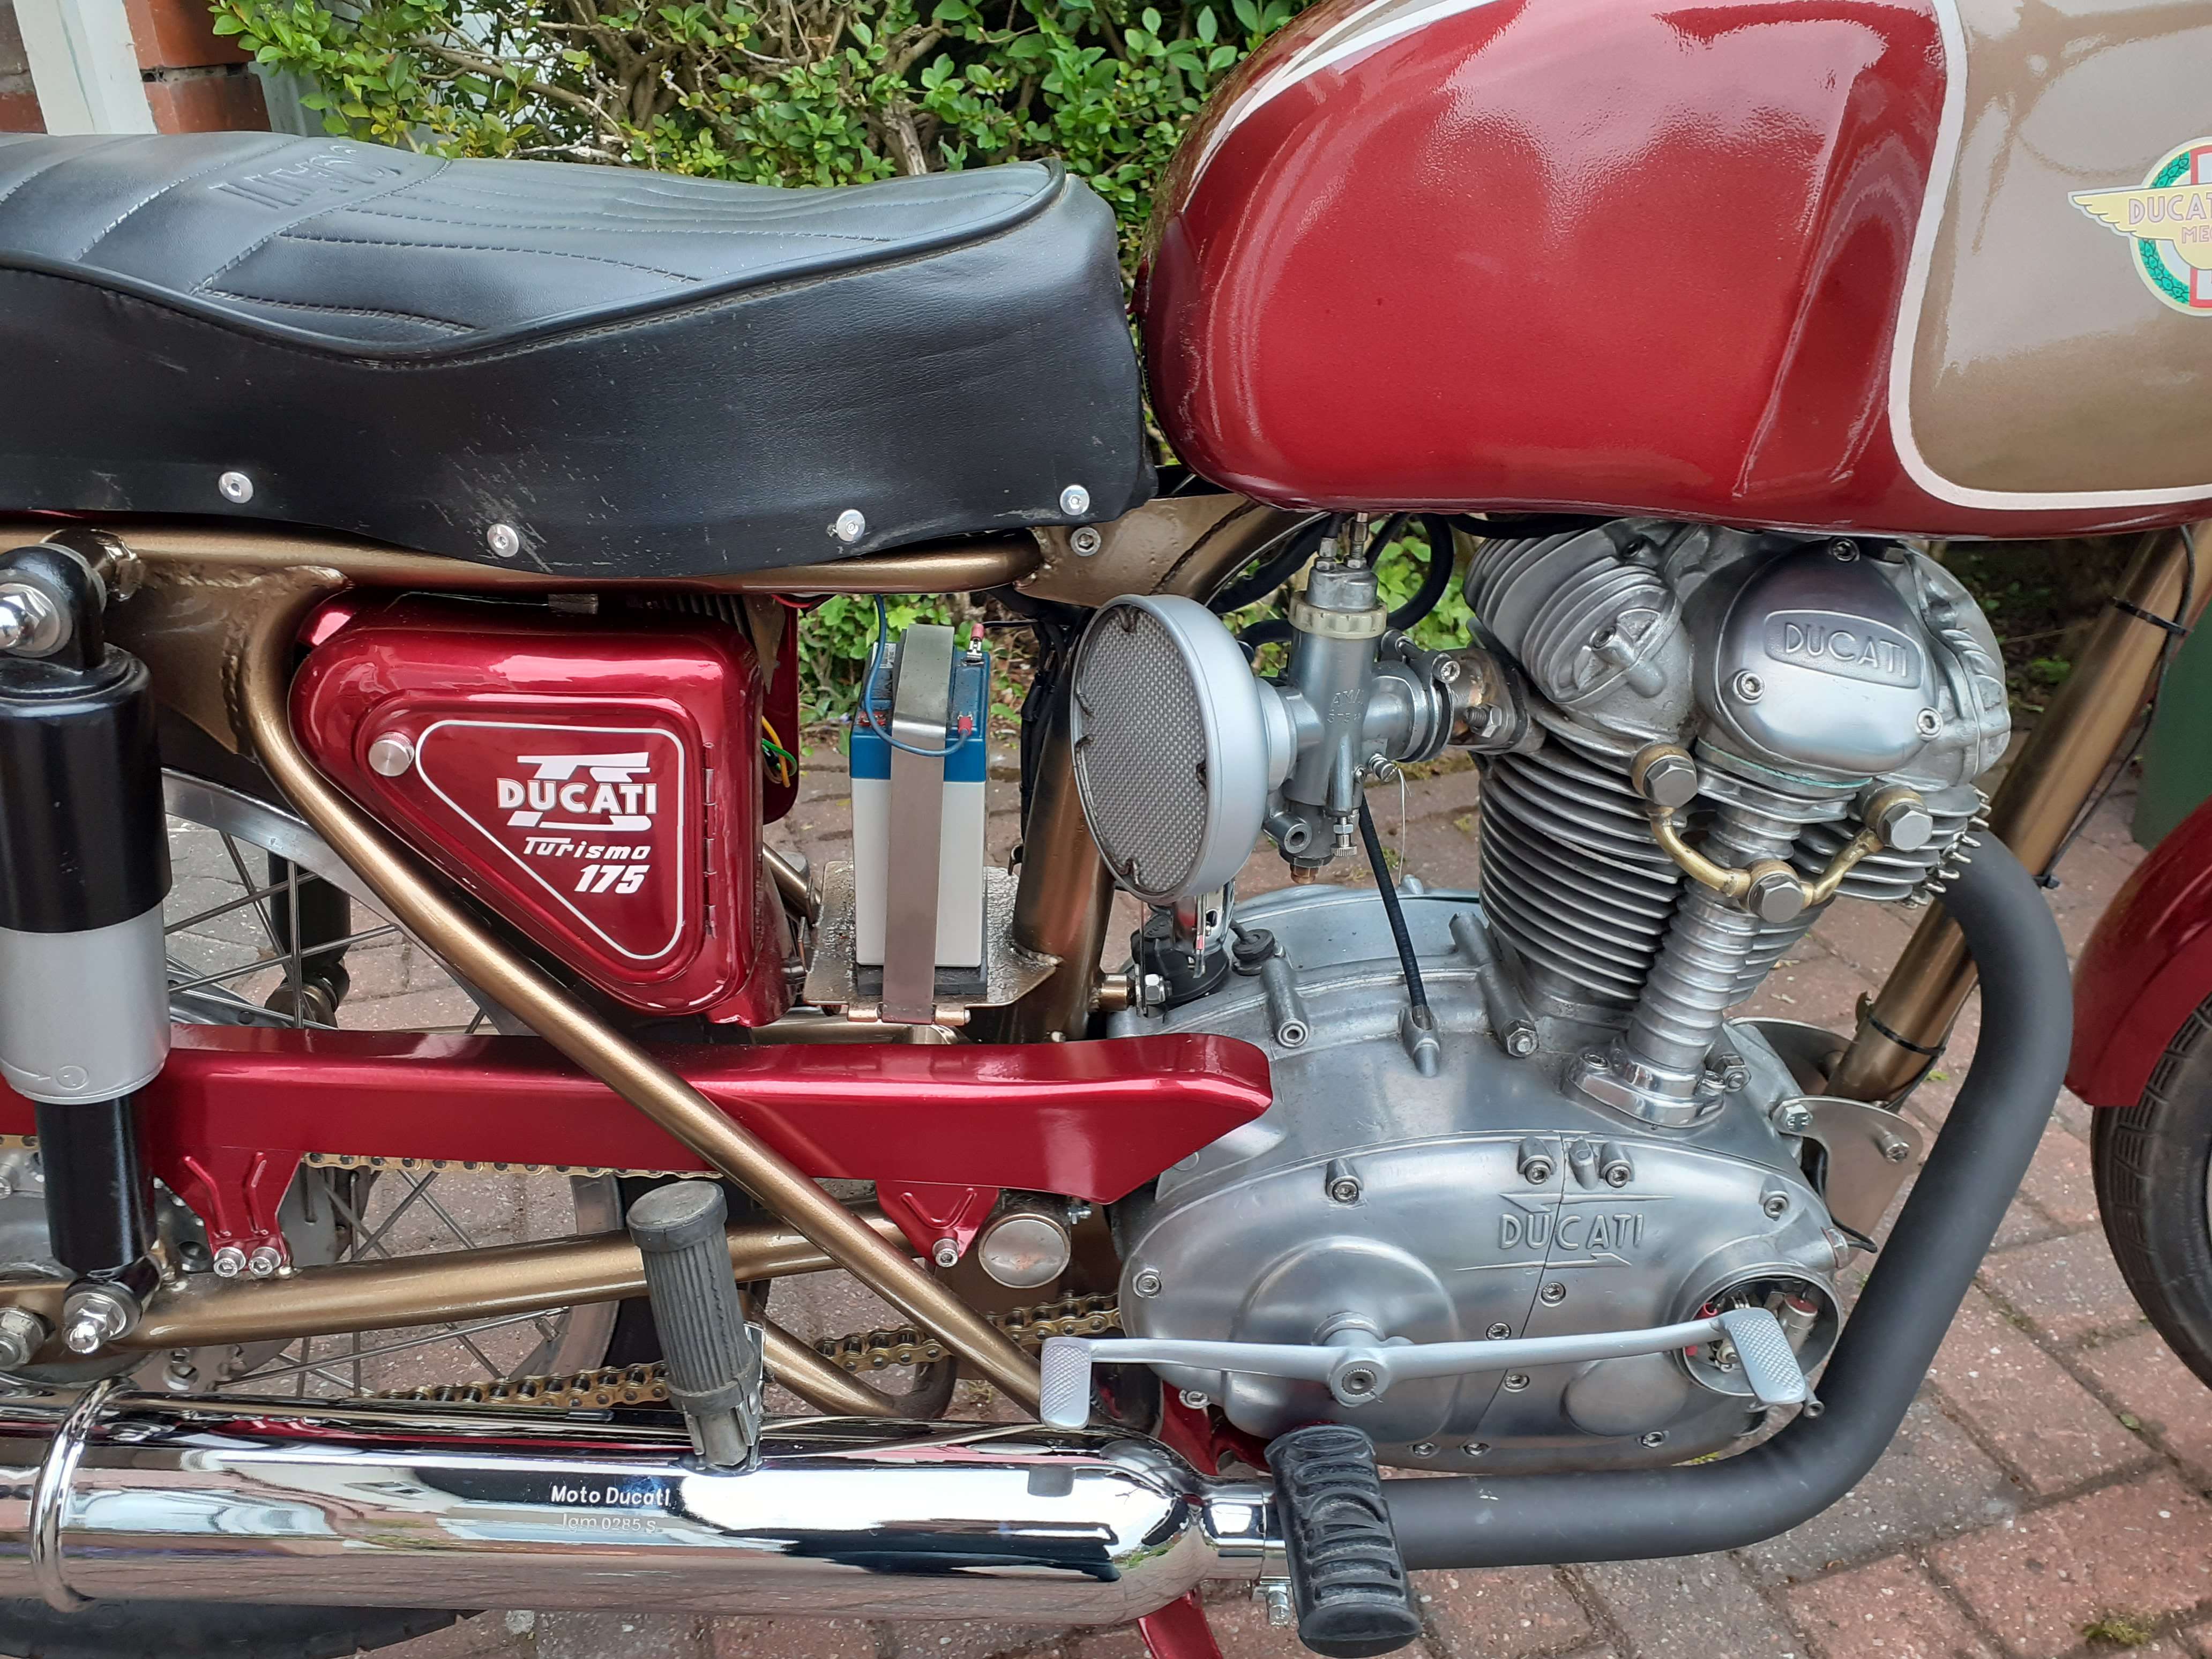 Ducati TS 175 3